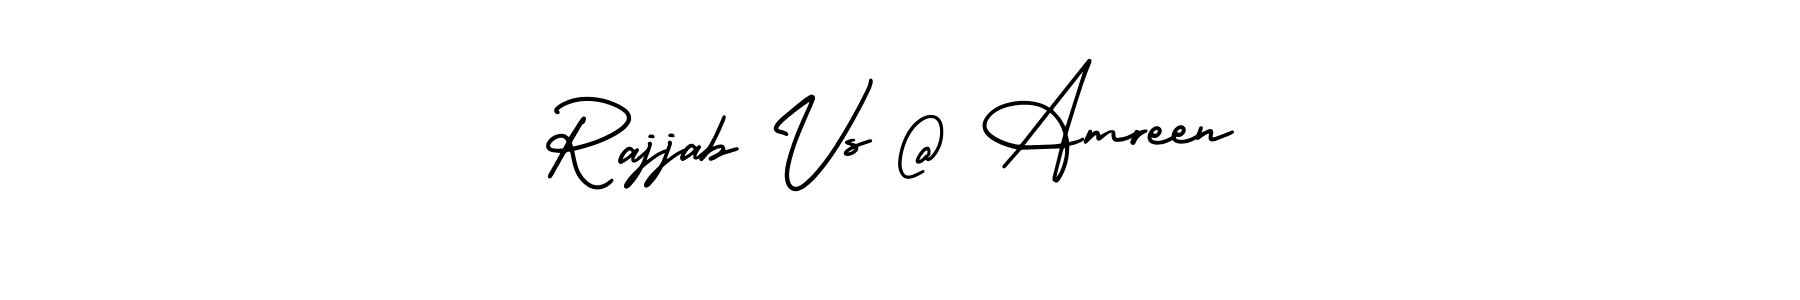 Make a beautiful signature design for name Rajjab Vs @ Amreen. Use this online signature maker to create a handwritten signature for free. Rajjab Vs @ Amreen signature style 3 images and pictures png